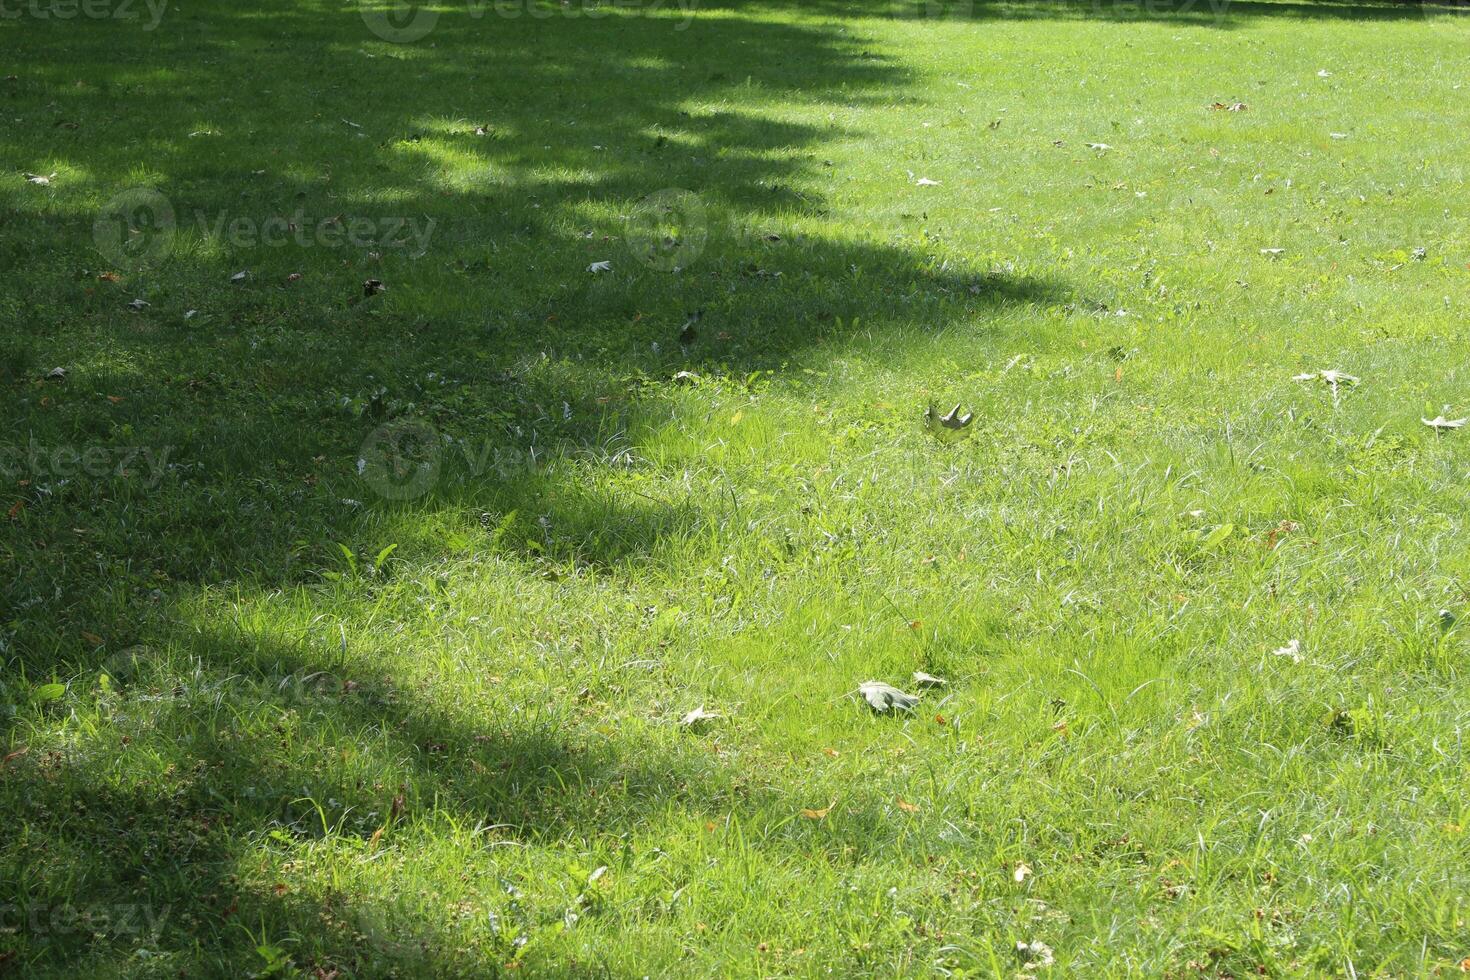 sombra de árvore na grama verde foto